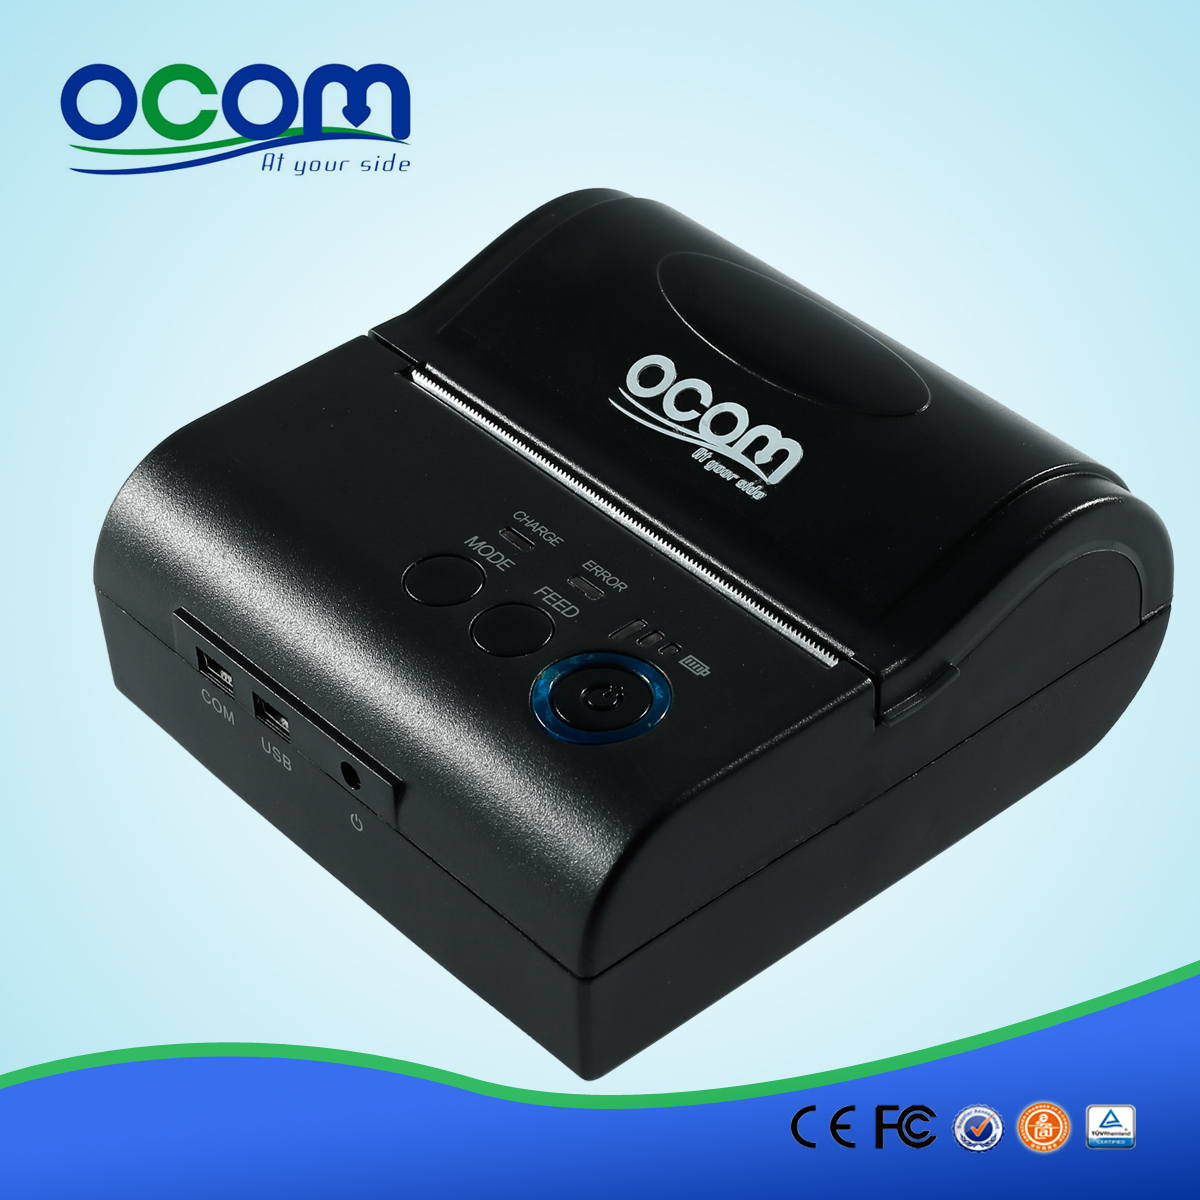 OCPP-M082: OCOM Hot verkopen goedkope 80mm bluetooth printer, 80mm bluetooth printer